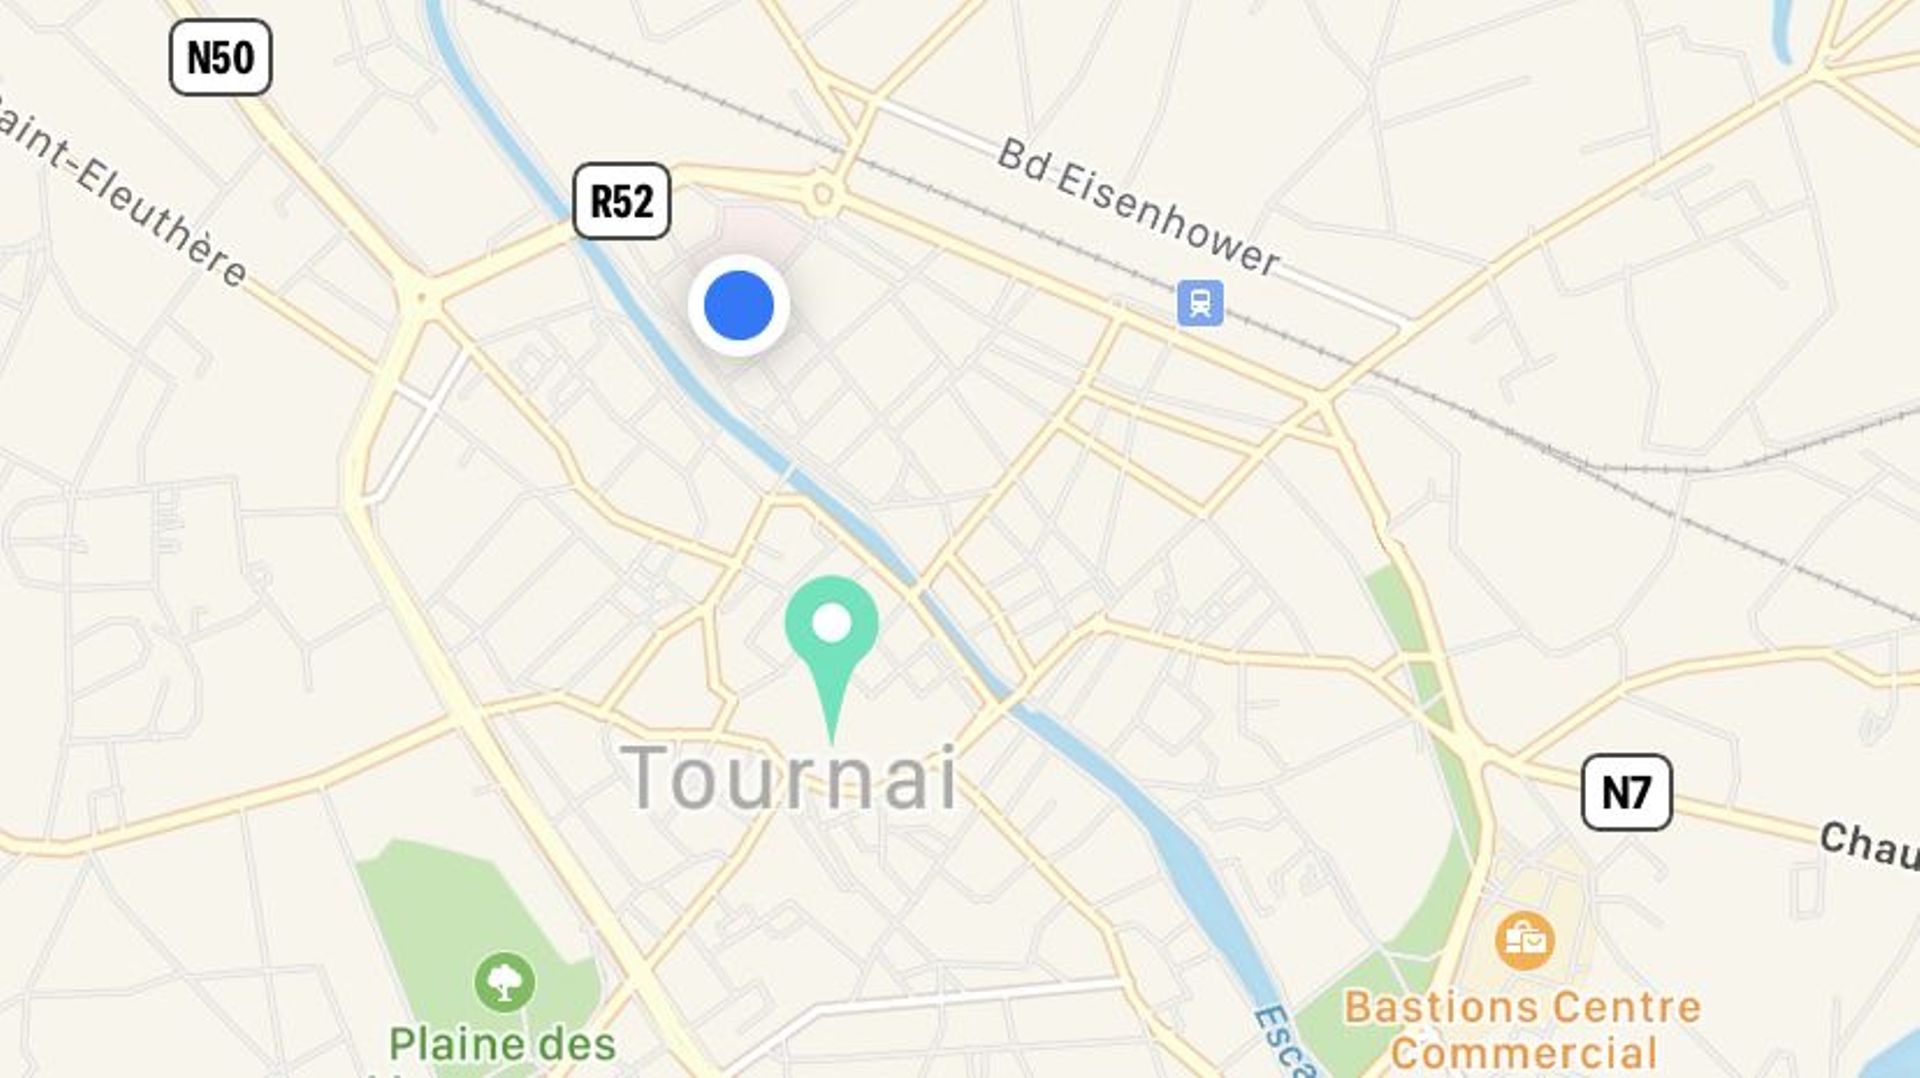 Flush ne propose qu'une adresse à Tournai.